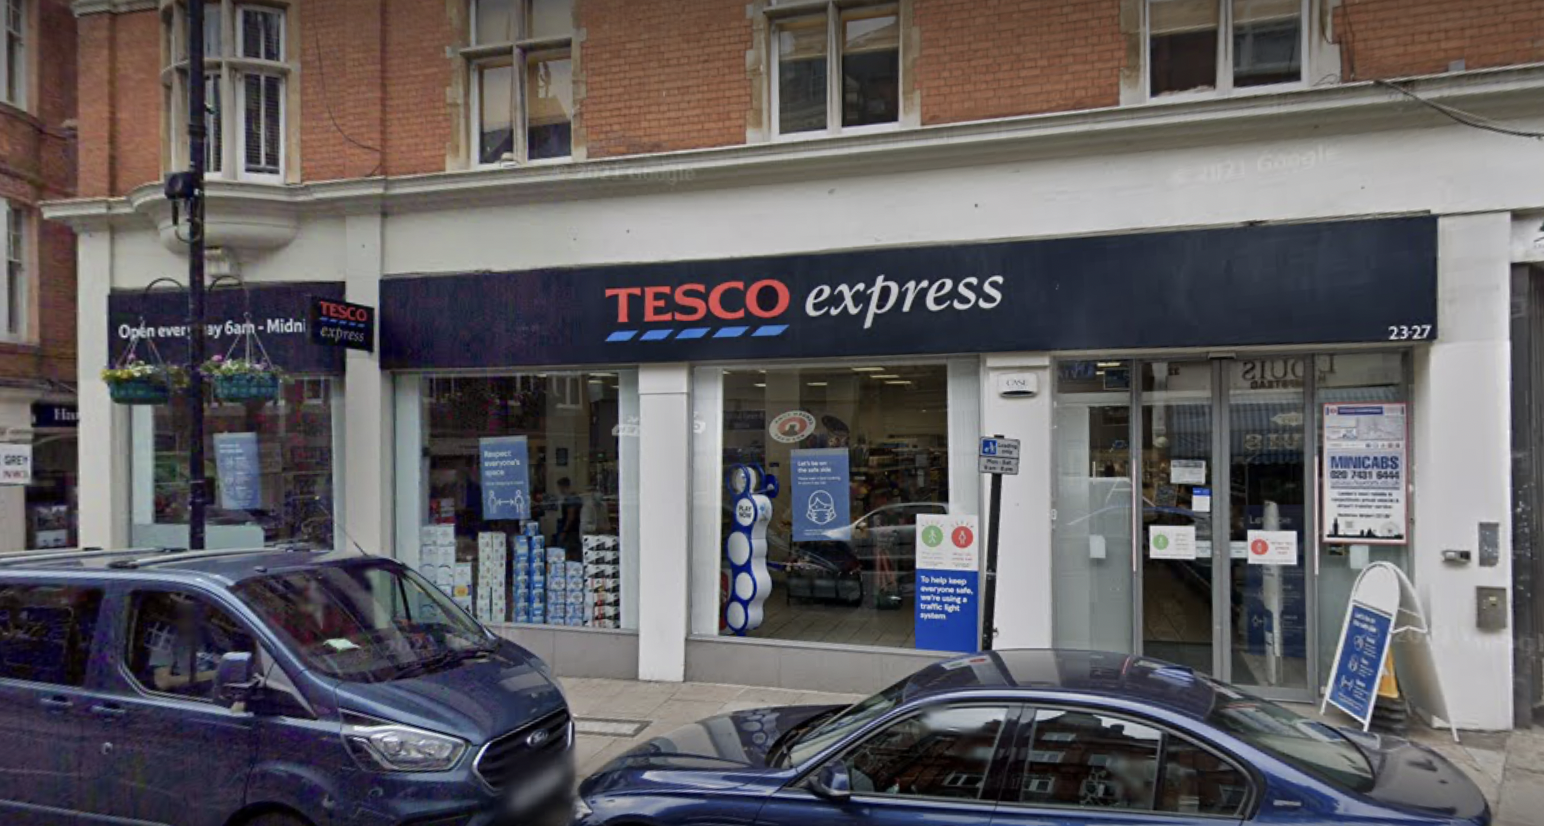 The incident took place on Tesco Express on Heath Street, Hampstead (Google)